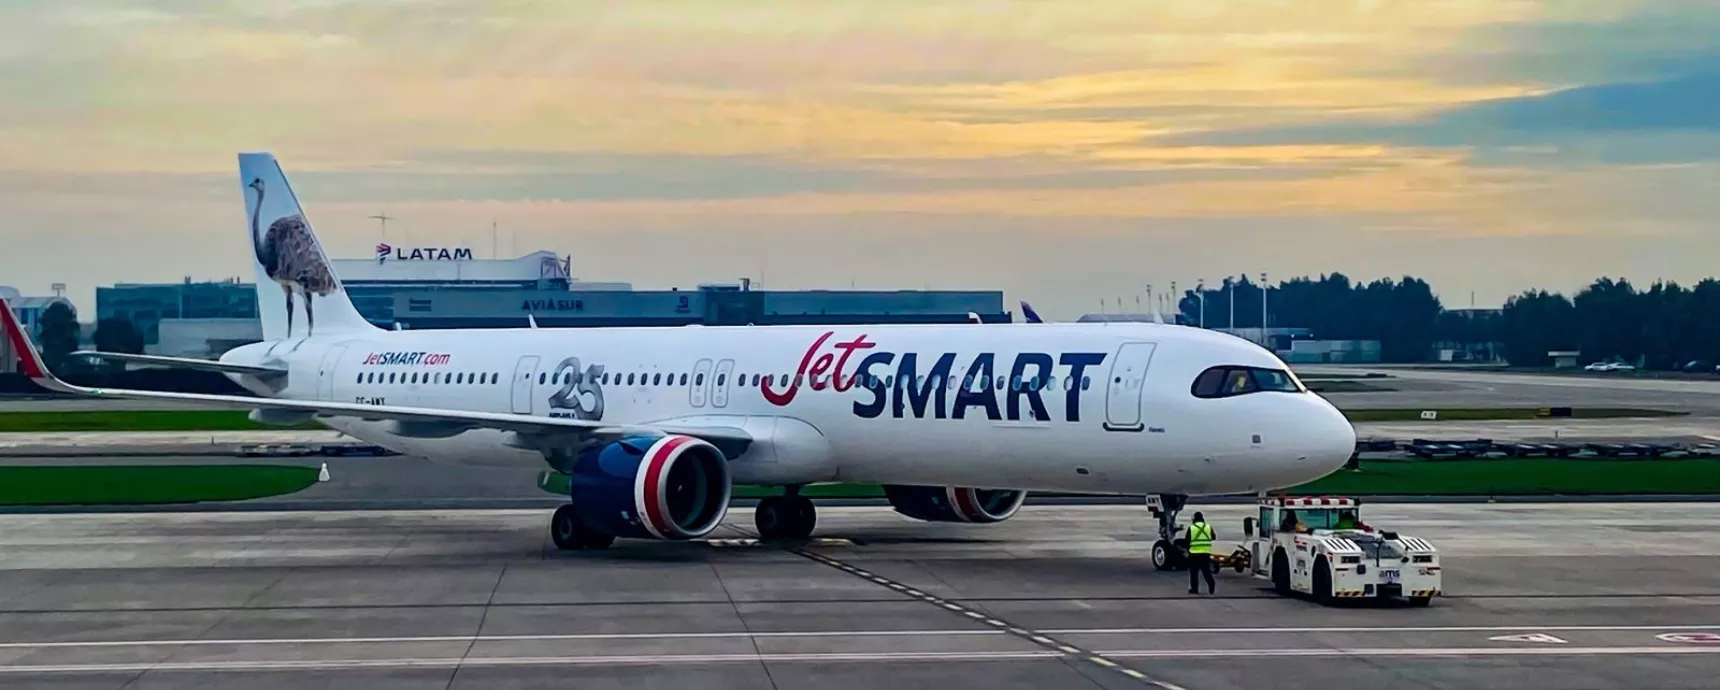 JetSMART arrives in Santa Catarina